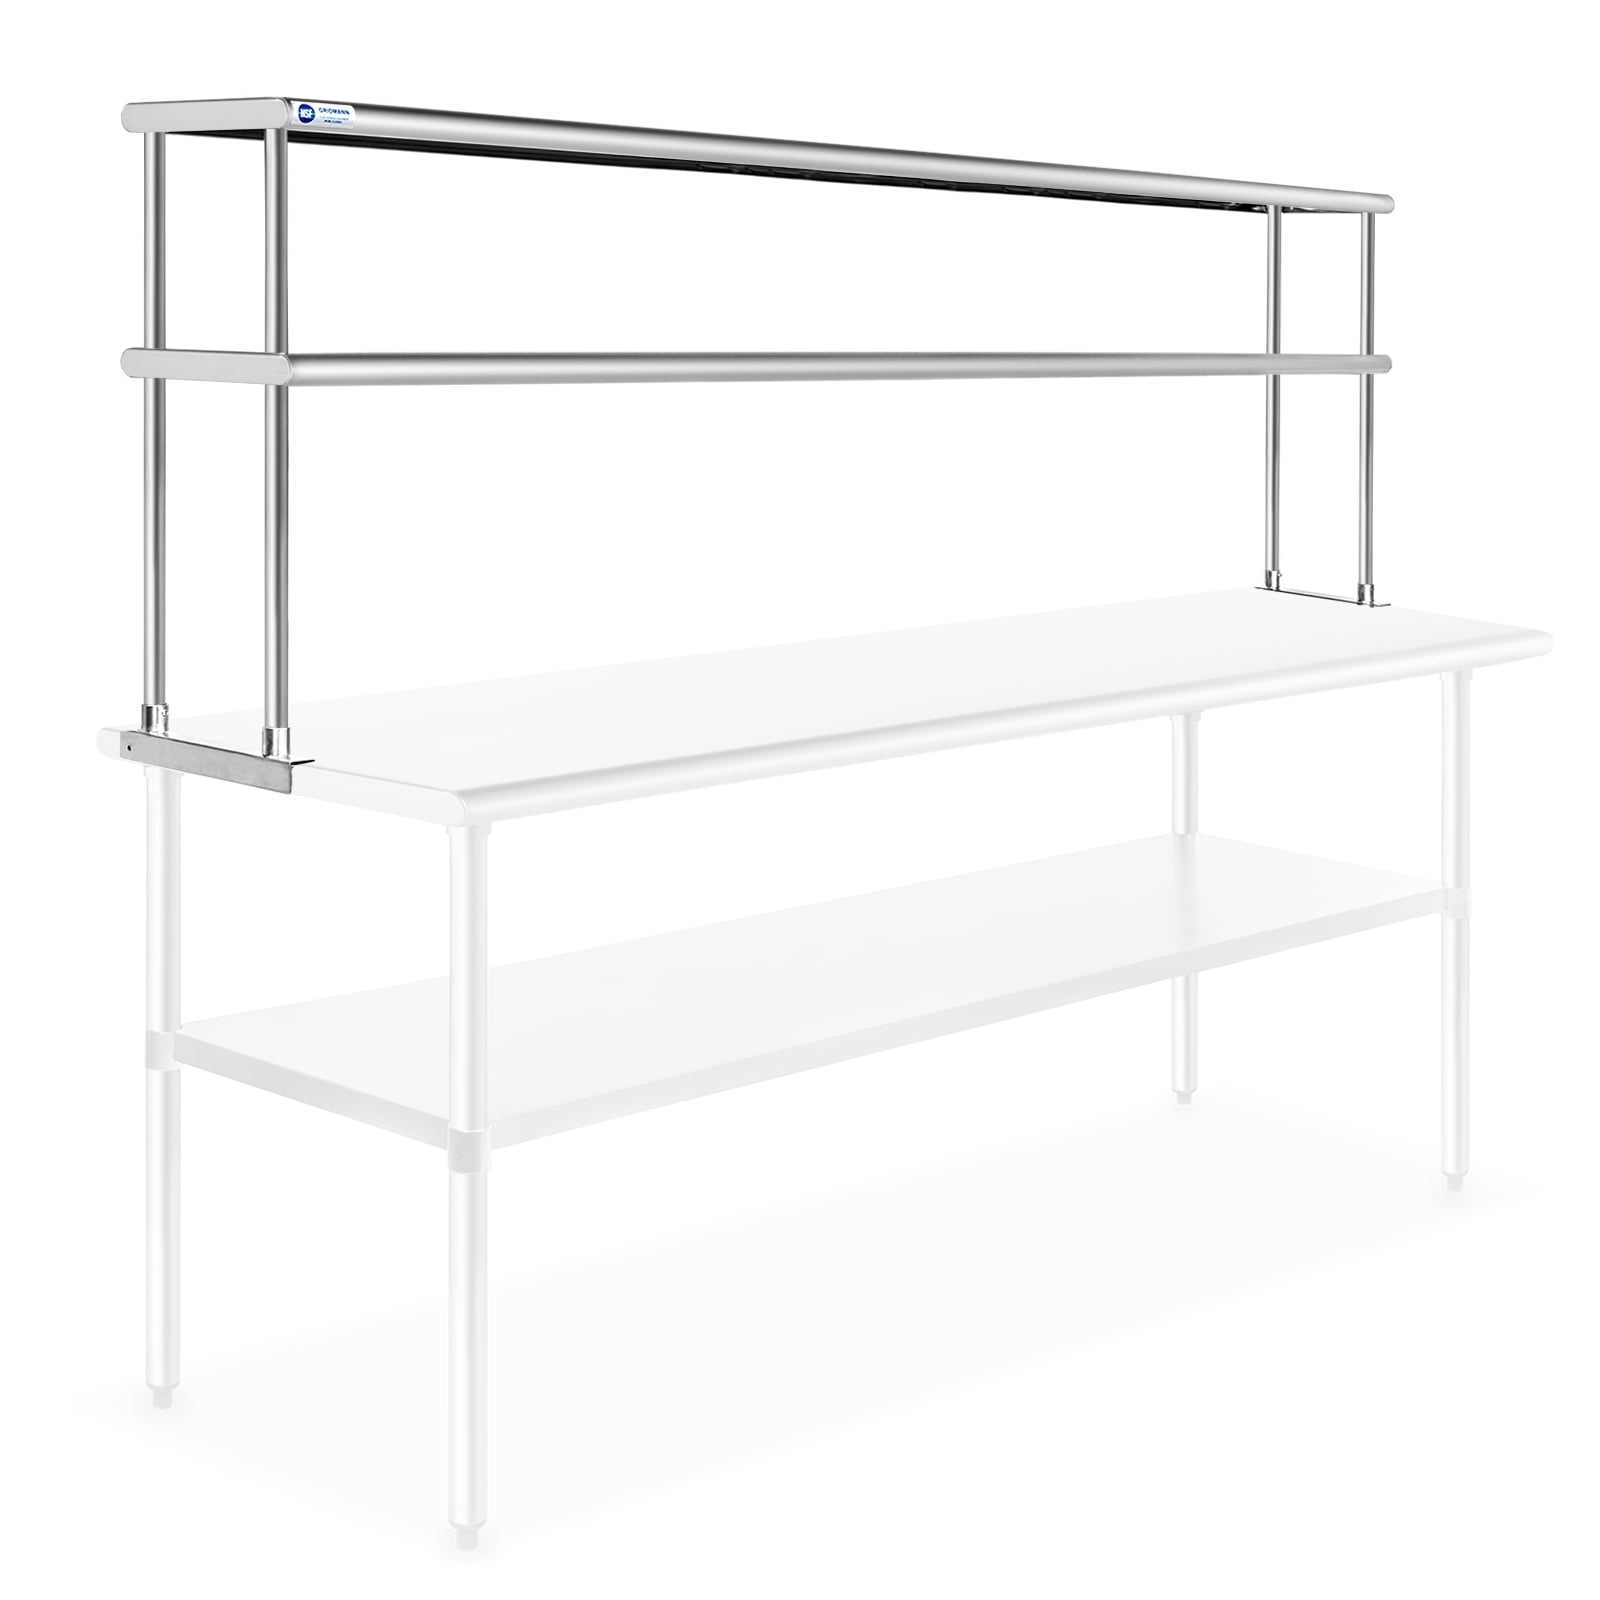 Stainless Steel Adjustable Double Overshelf for Work Table Top Mount 12 x 60